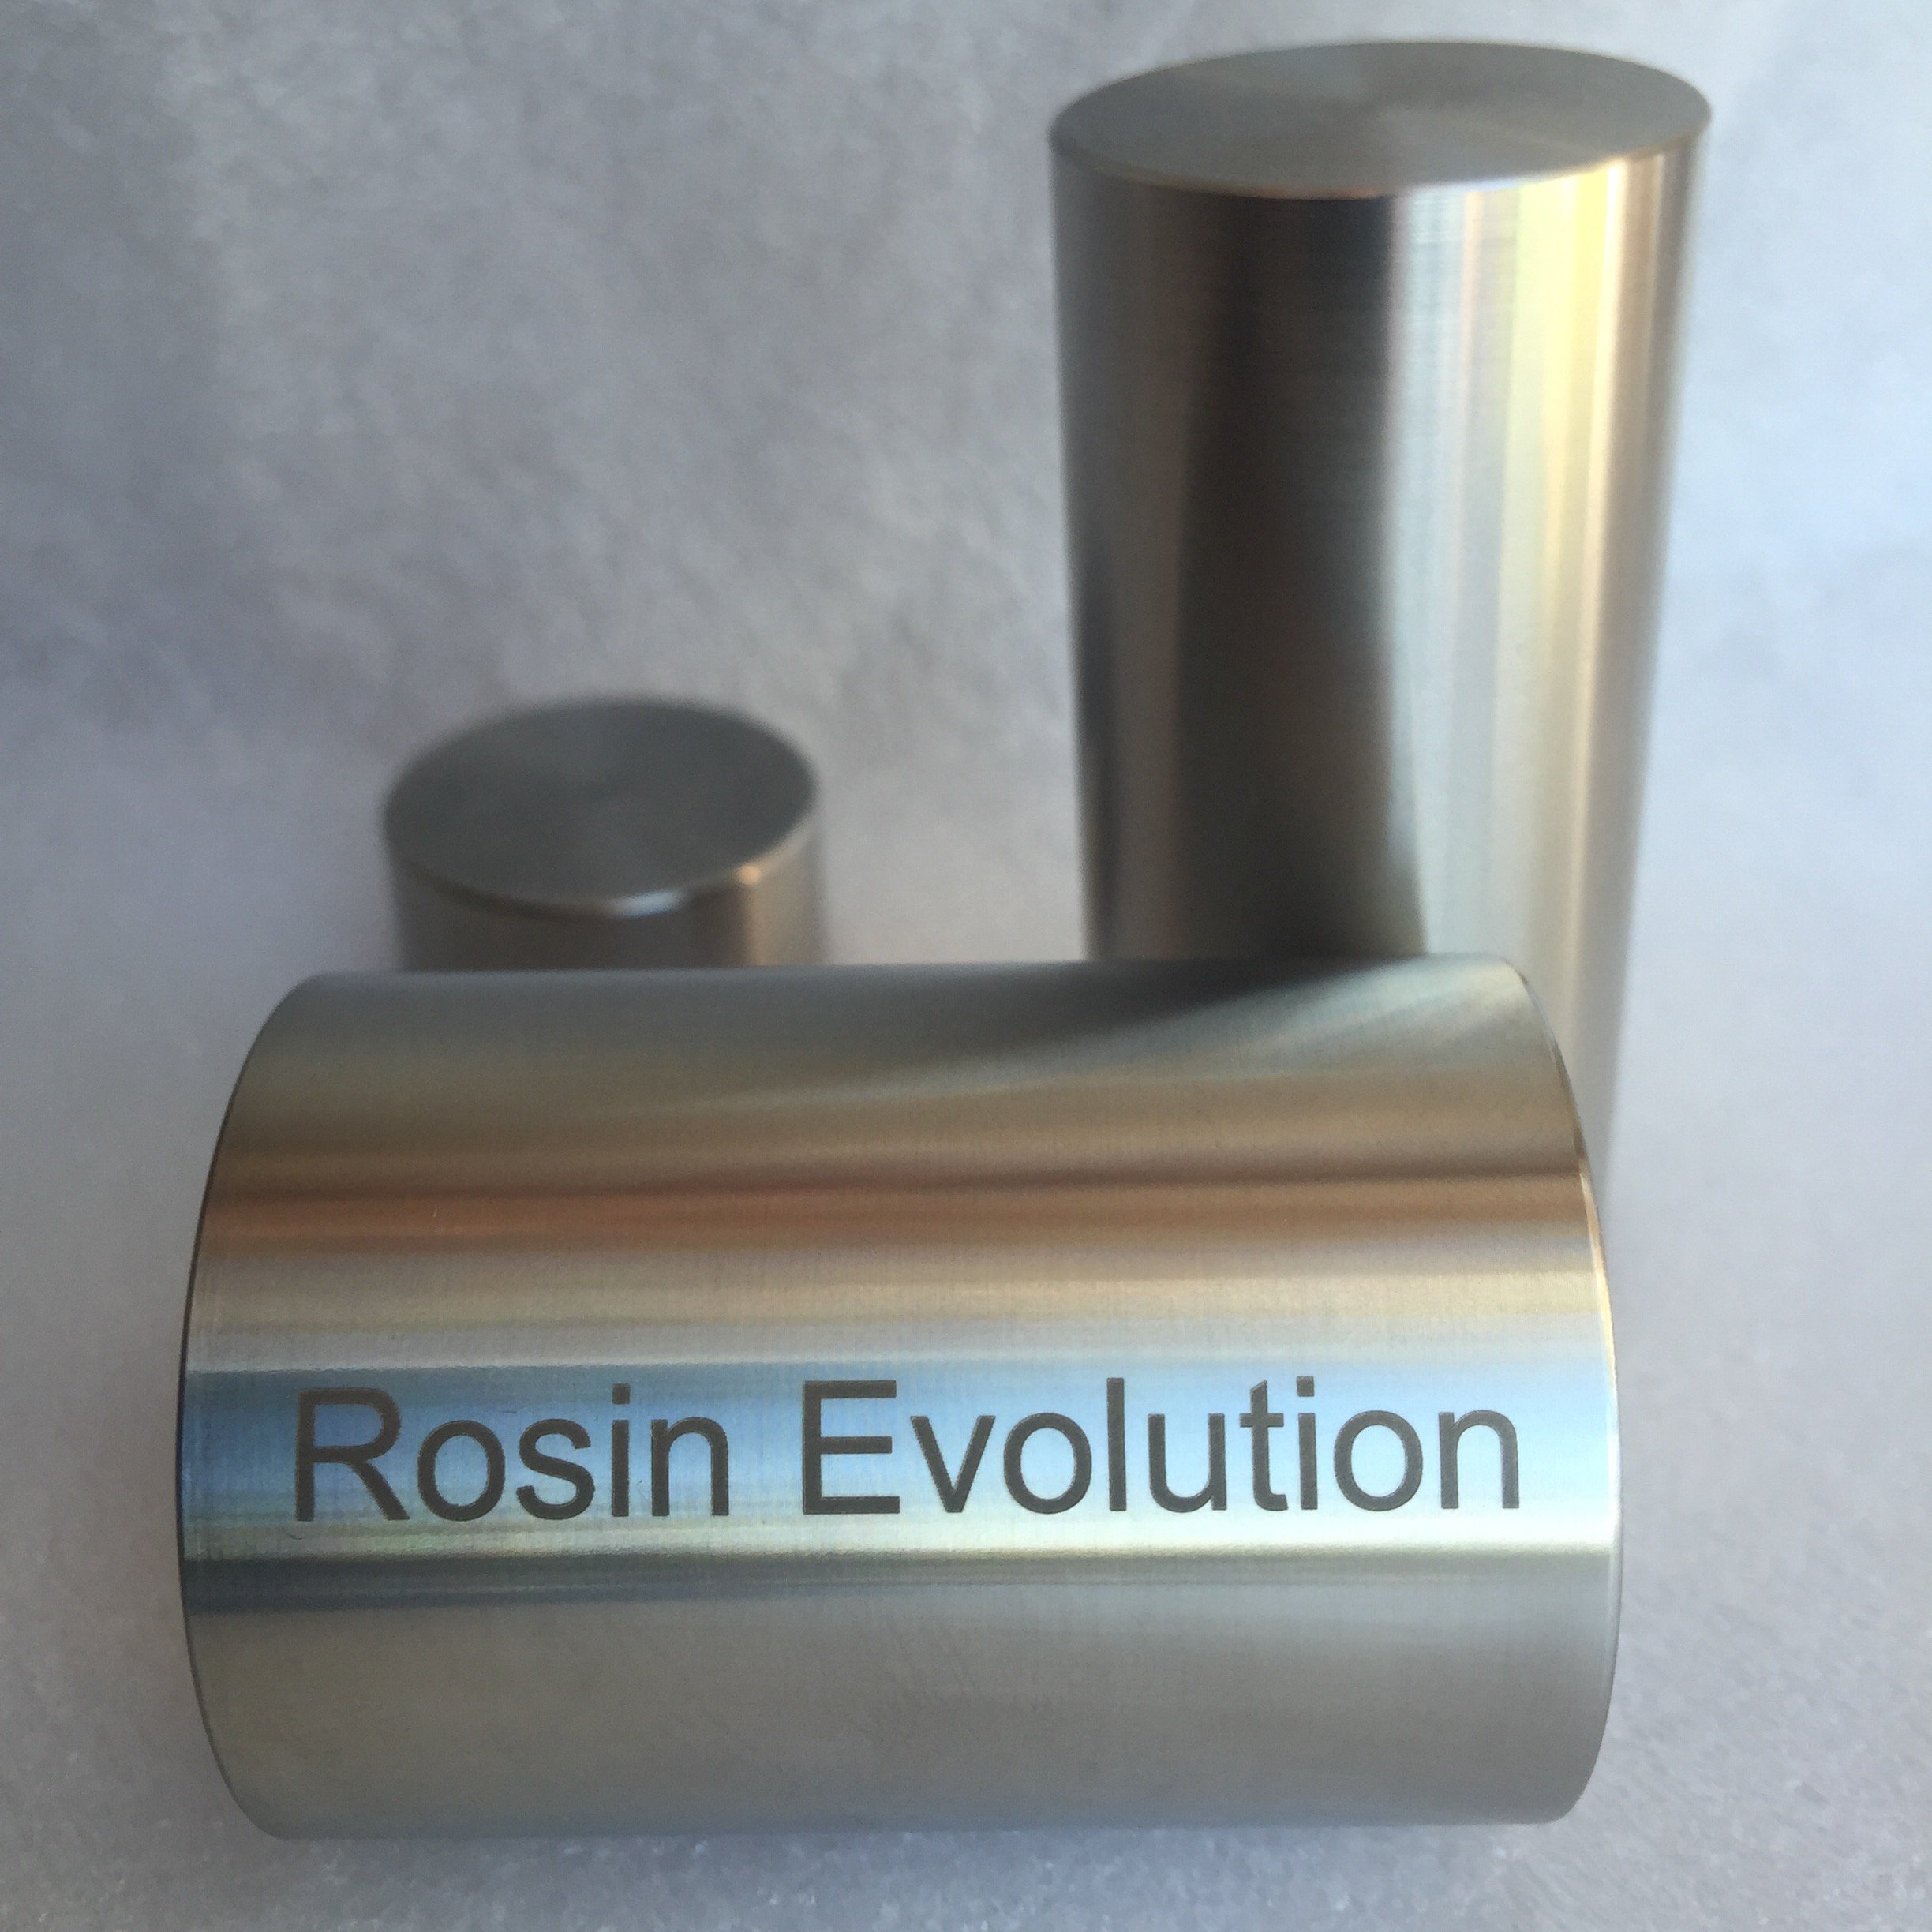 Rosin Evolution Press Bags - 90 Micron Screens 2 x 4.5 - 50 Pack